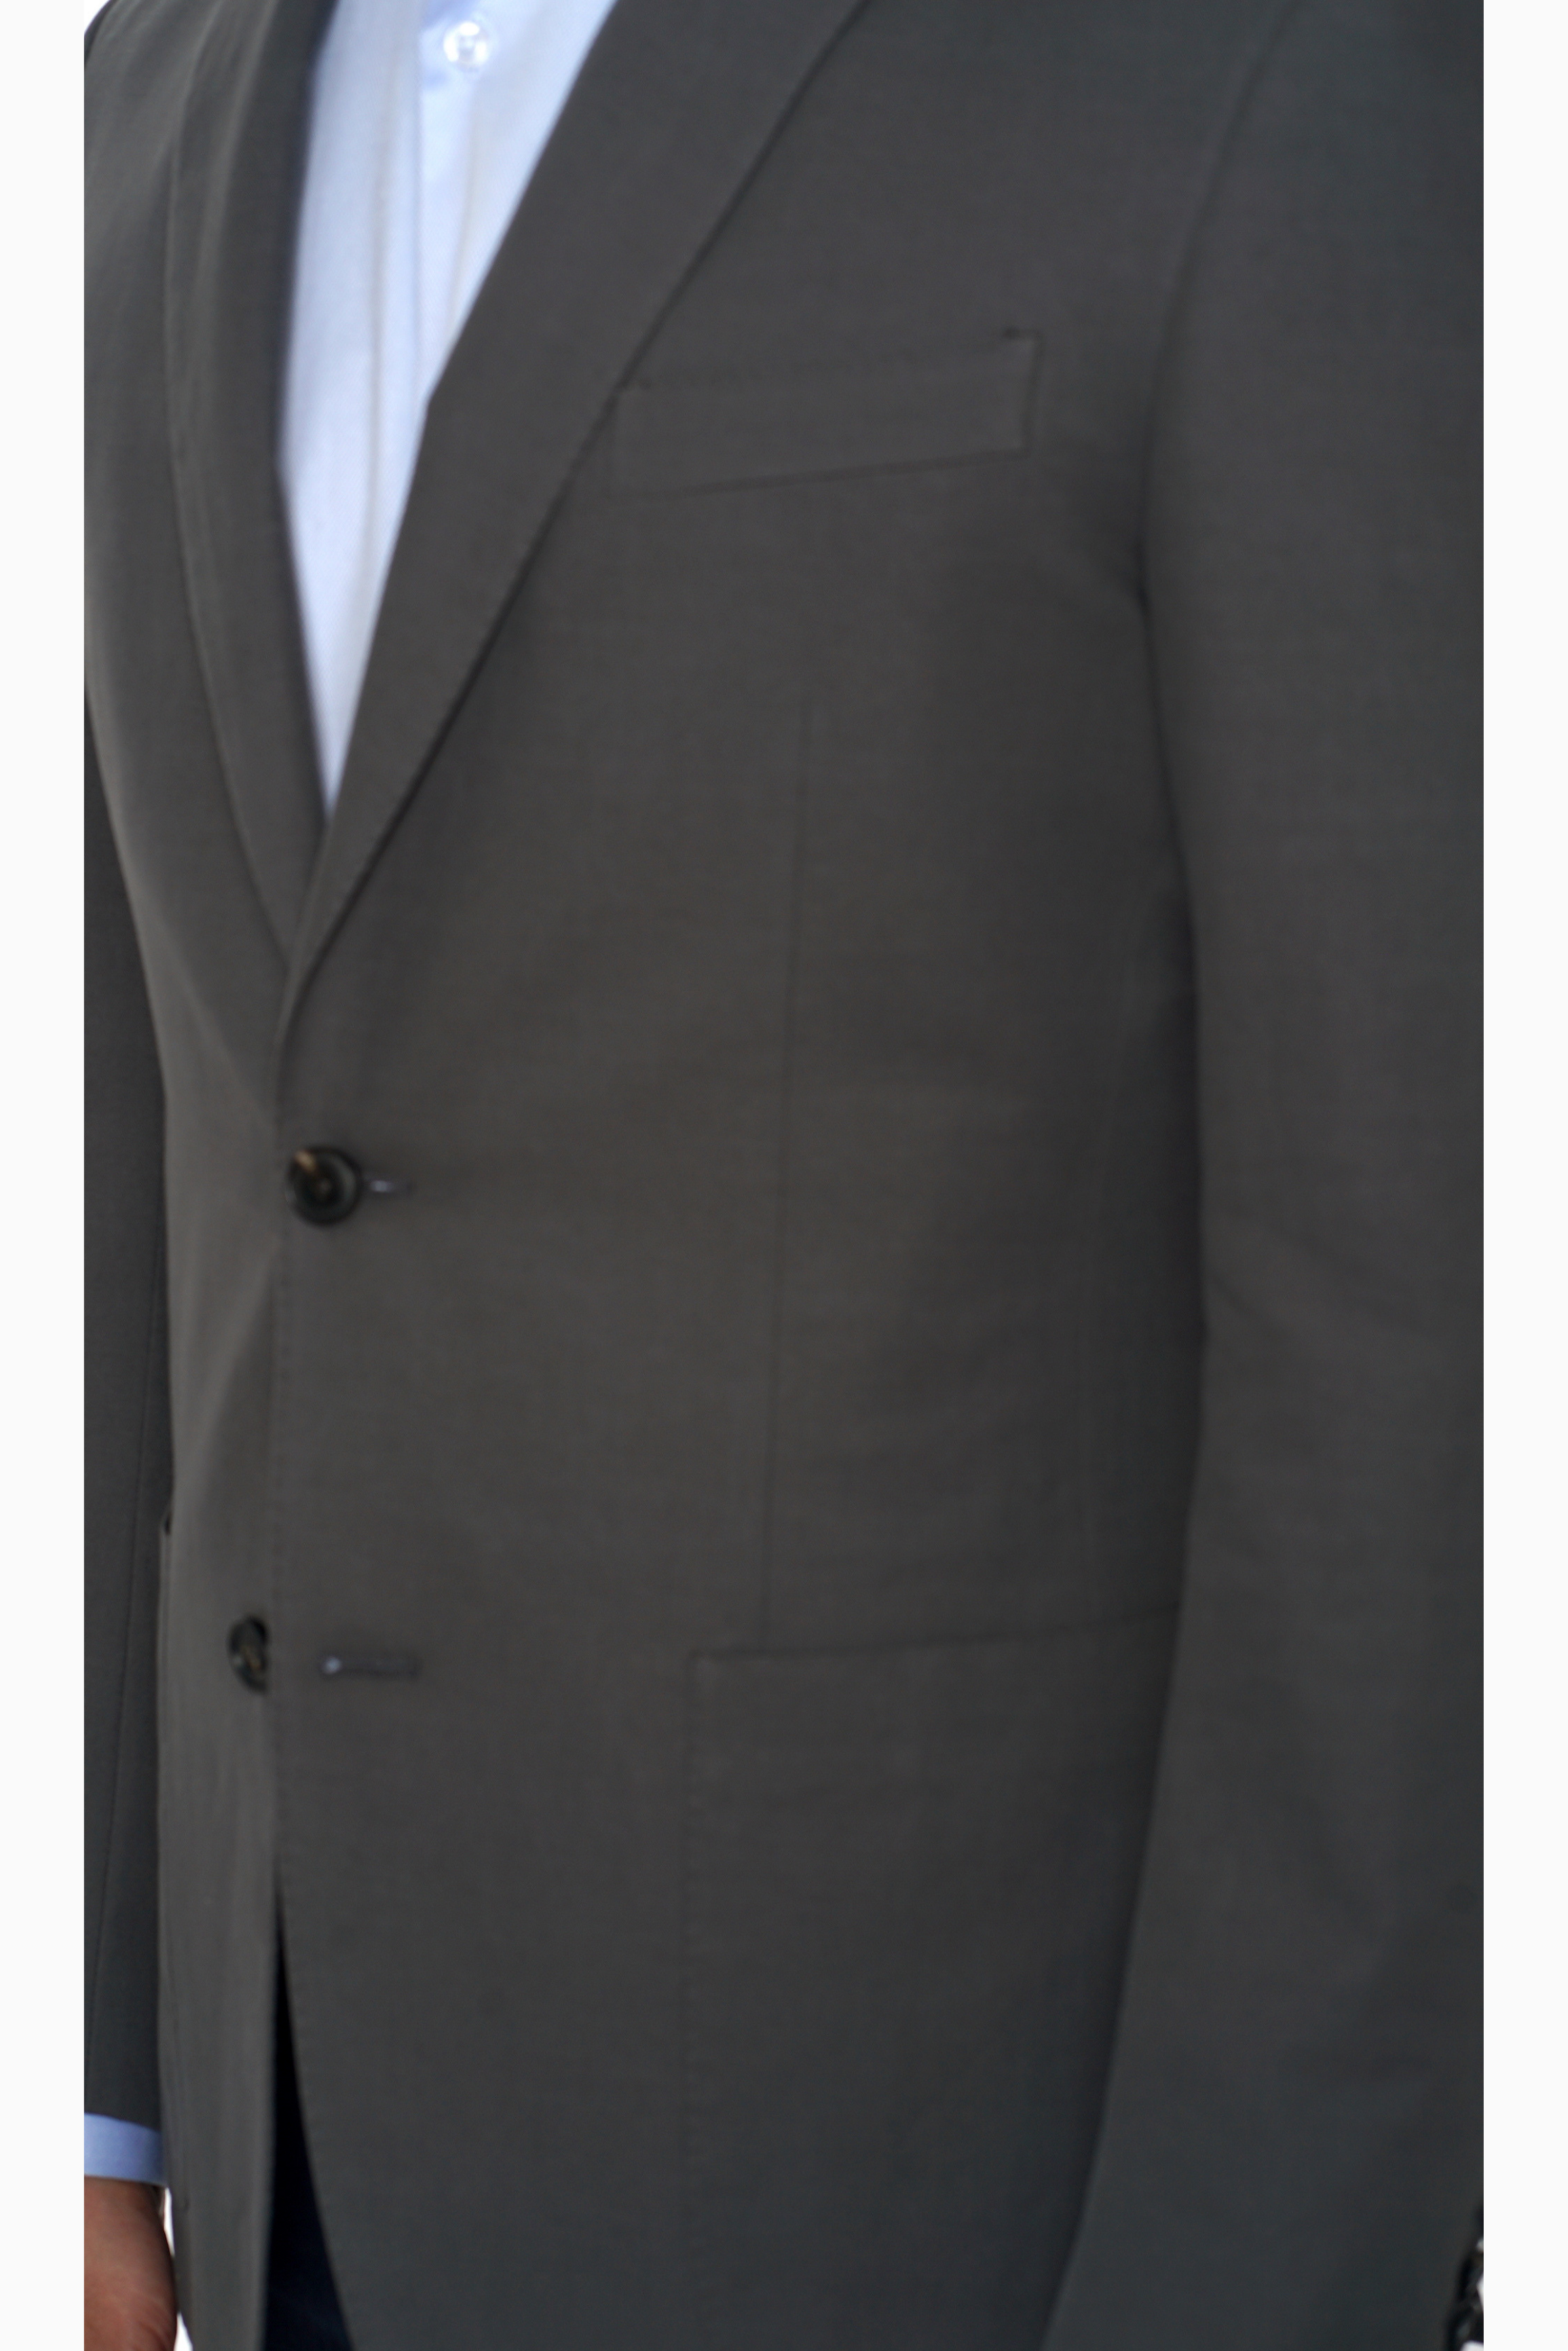 Pal Zileri Grey Sport Coat - Mastroianni Fashions